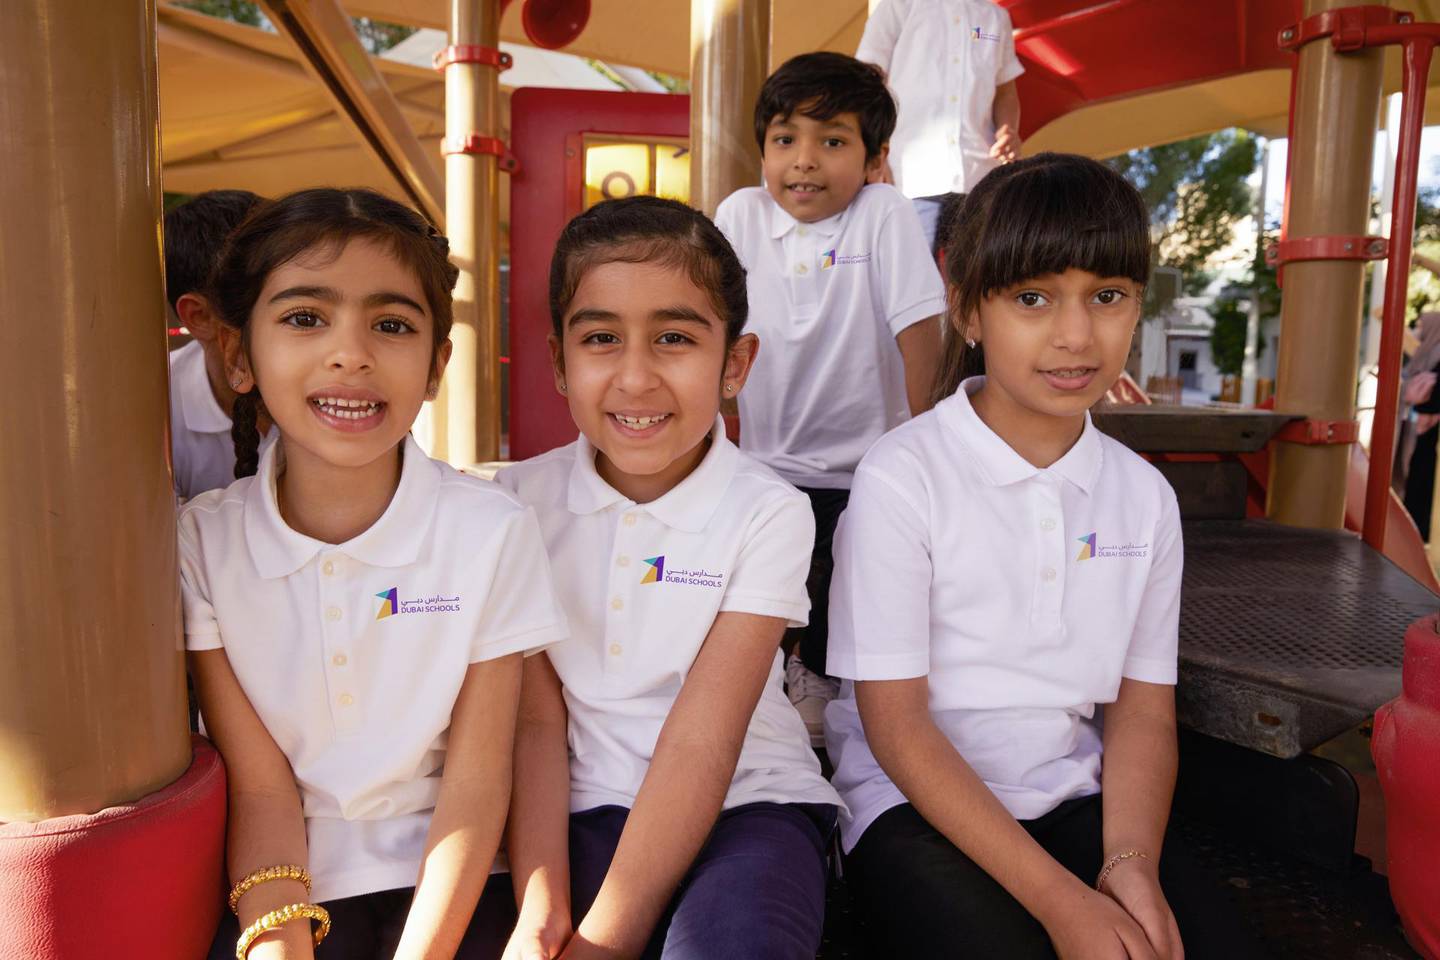 Dubai Schools will initially be open to children in preschool to Grade 4. Courtesy: Taaleem